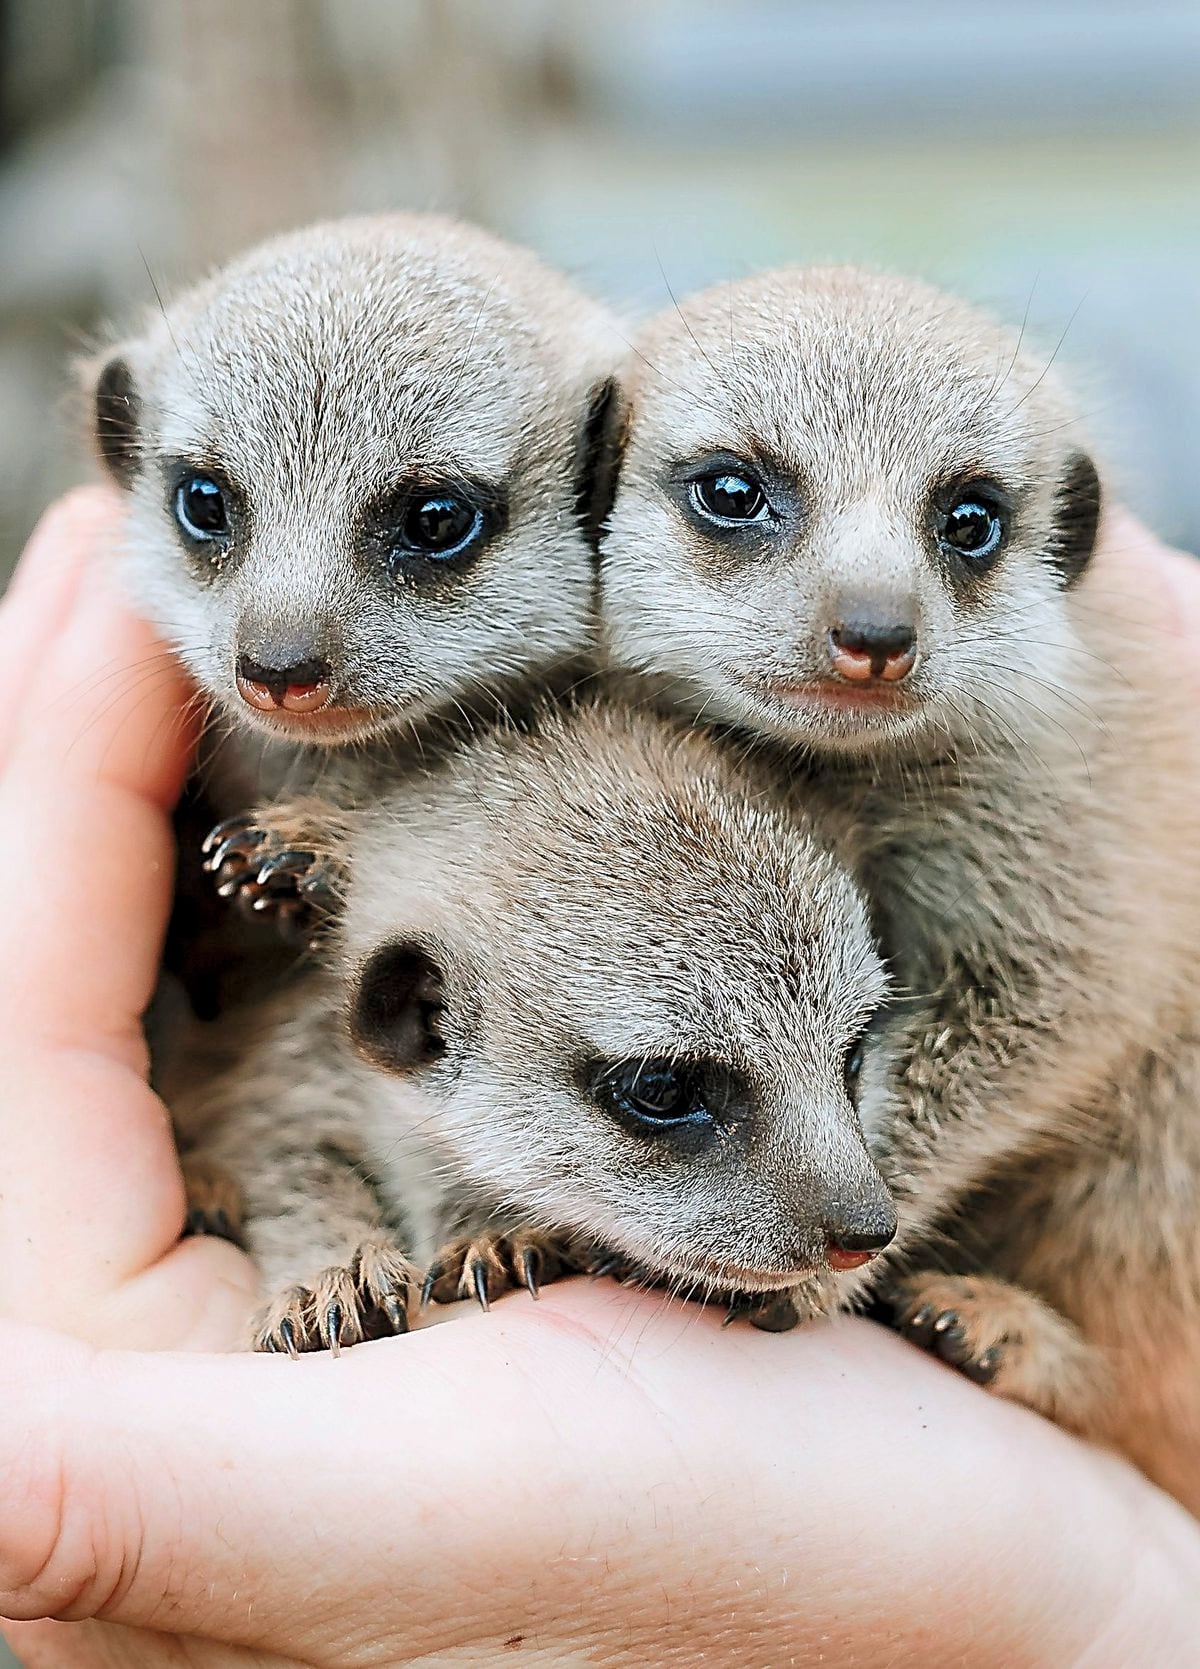 Baby Meerkats born at Exotic Zoo in Telford